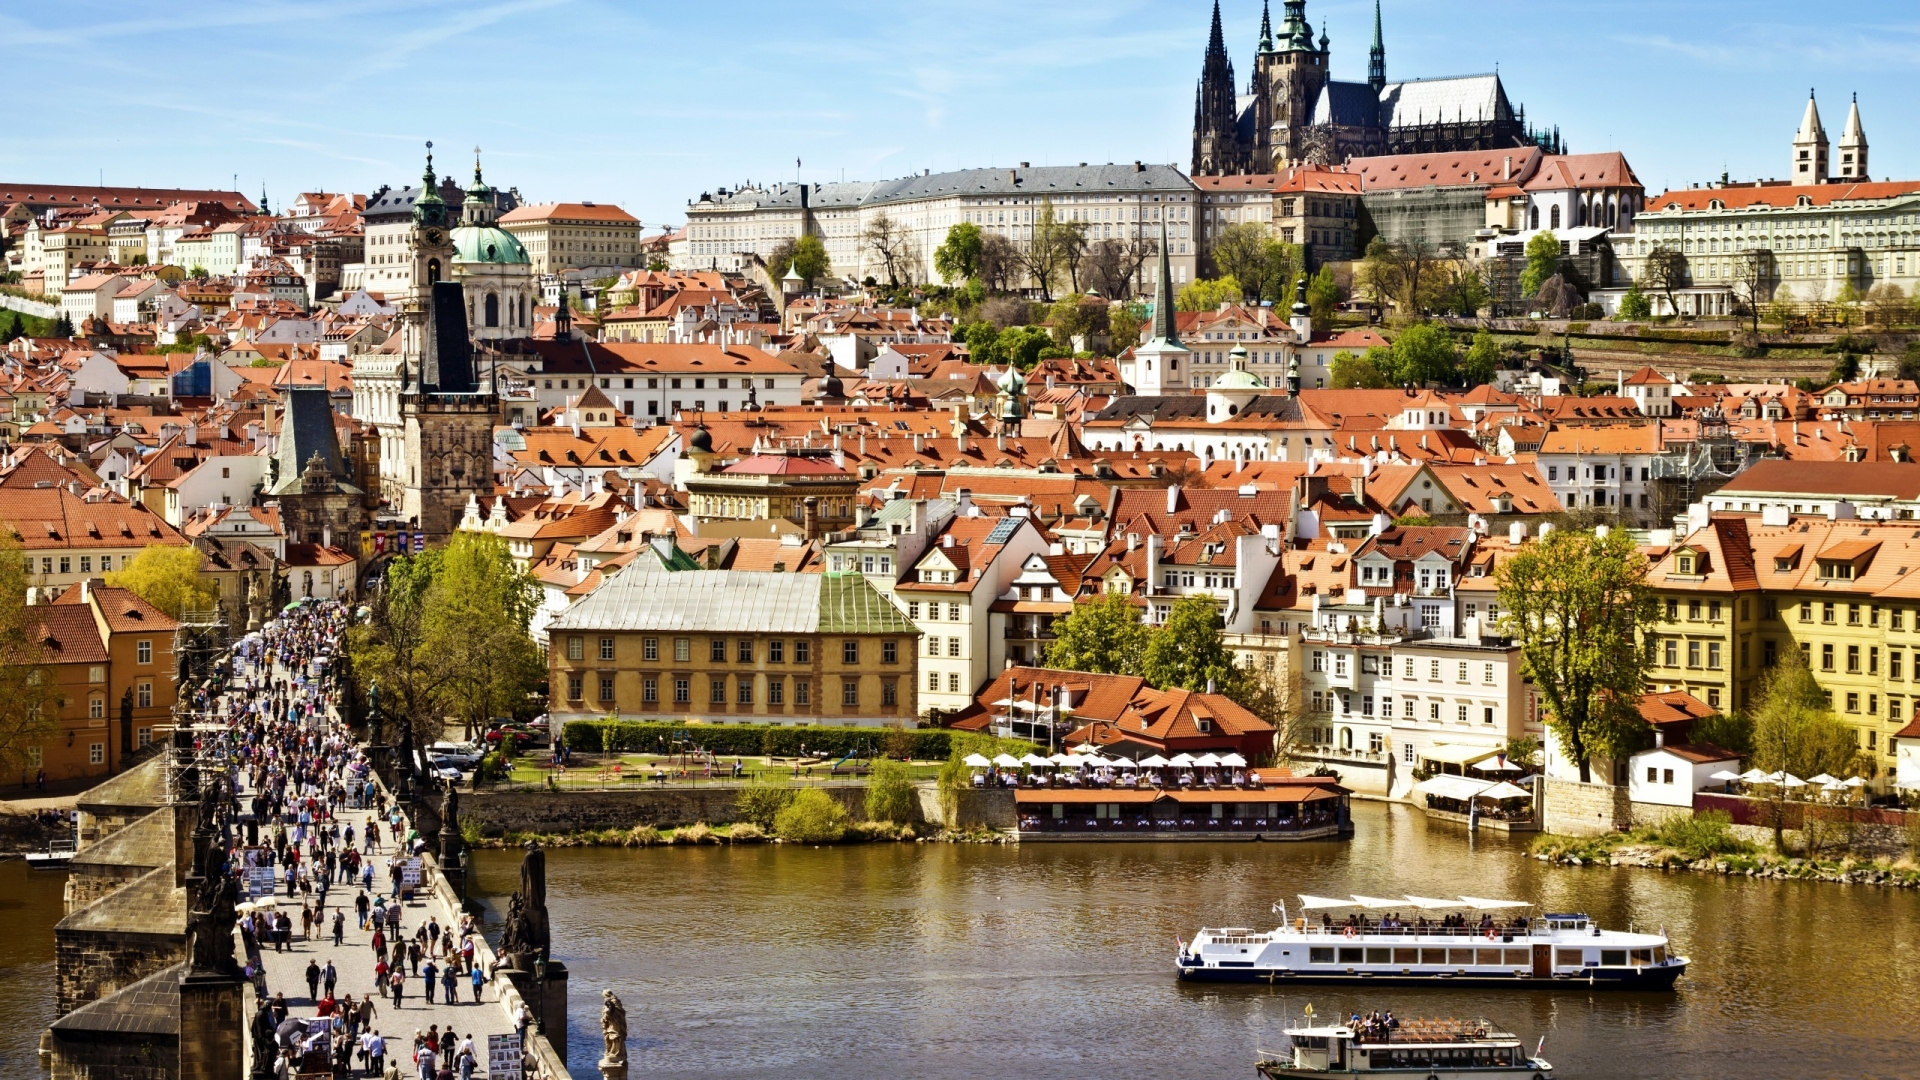 Prague City View for 1920 x 1080 HDTV 1080p resolution